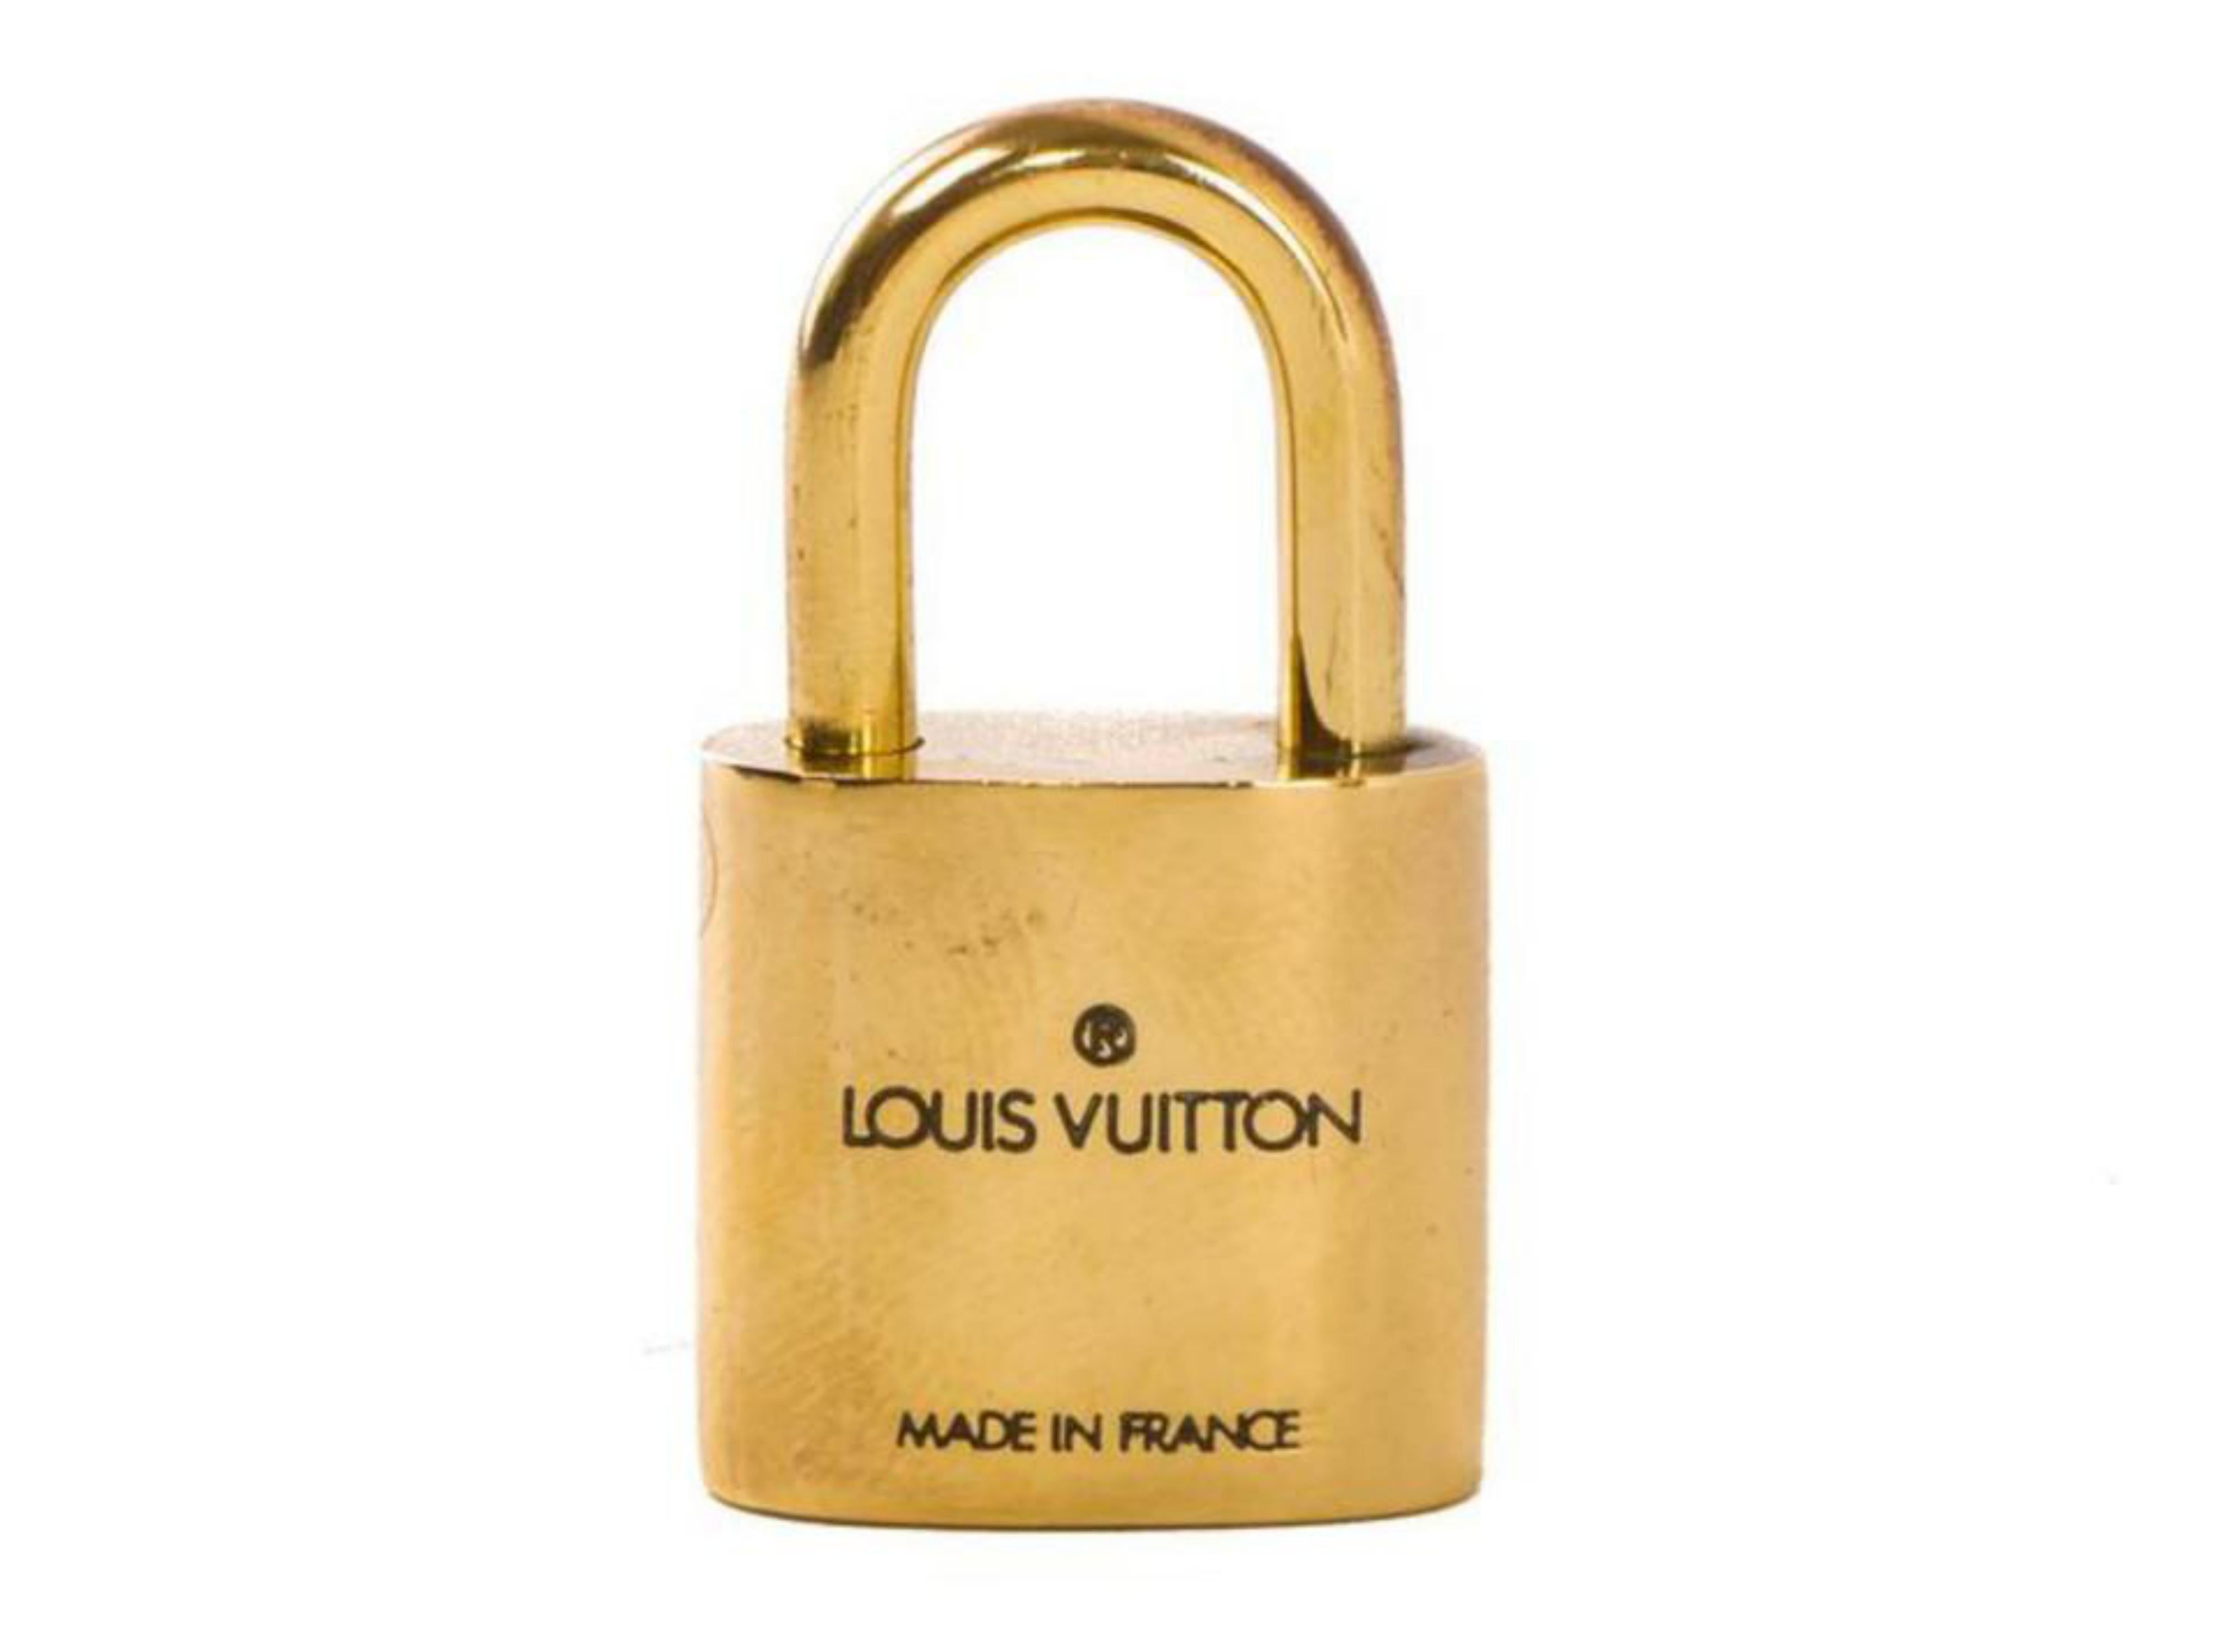 Louis Vuitton Gold Single Key Lock Pad Lock and Key 867604 3